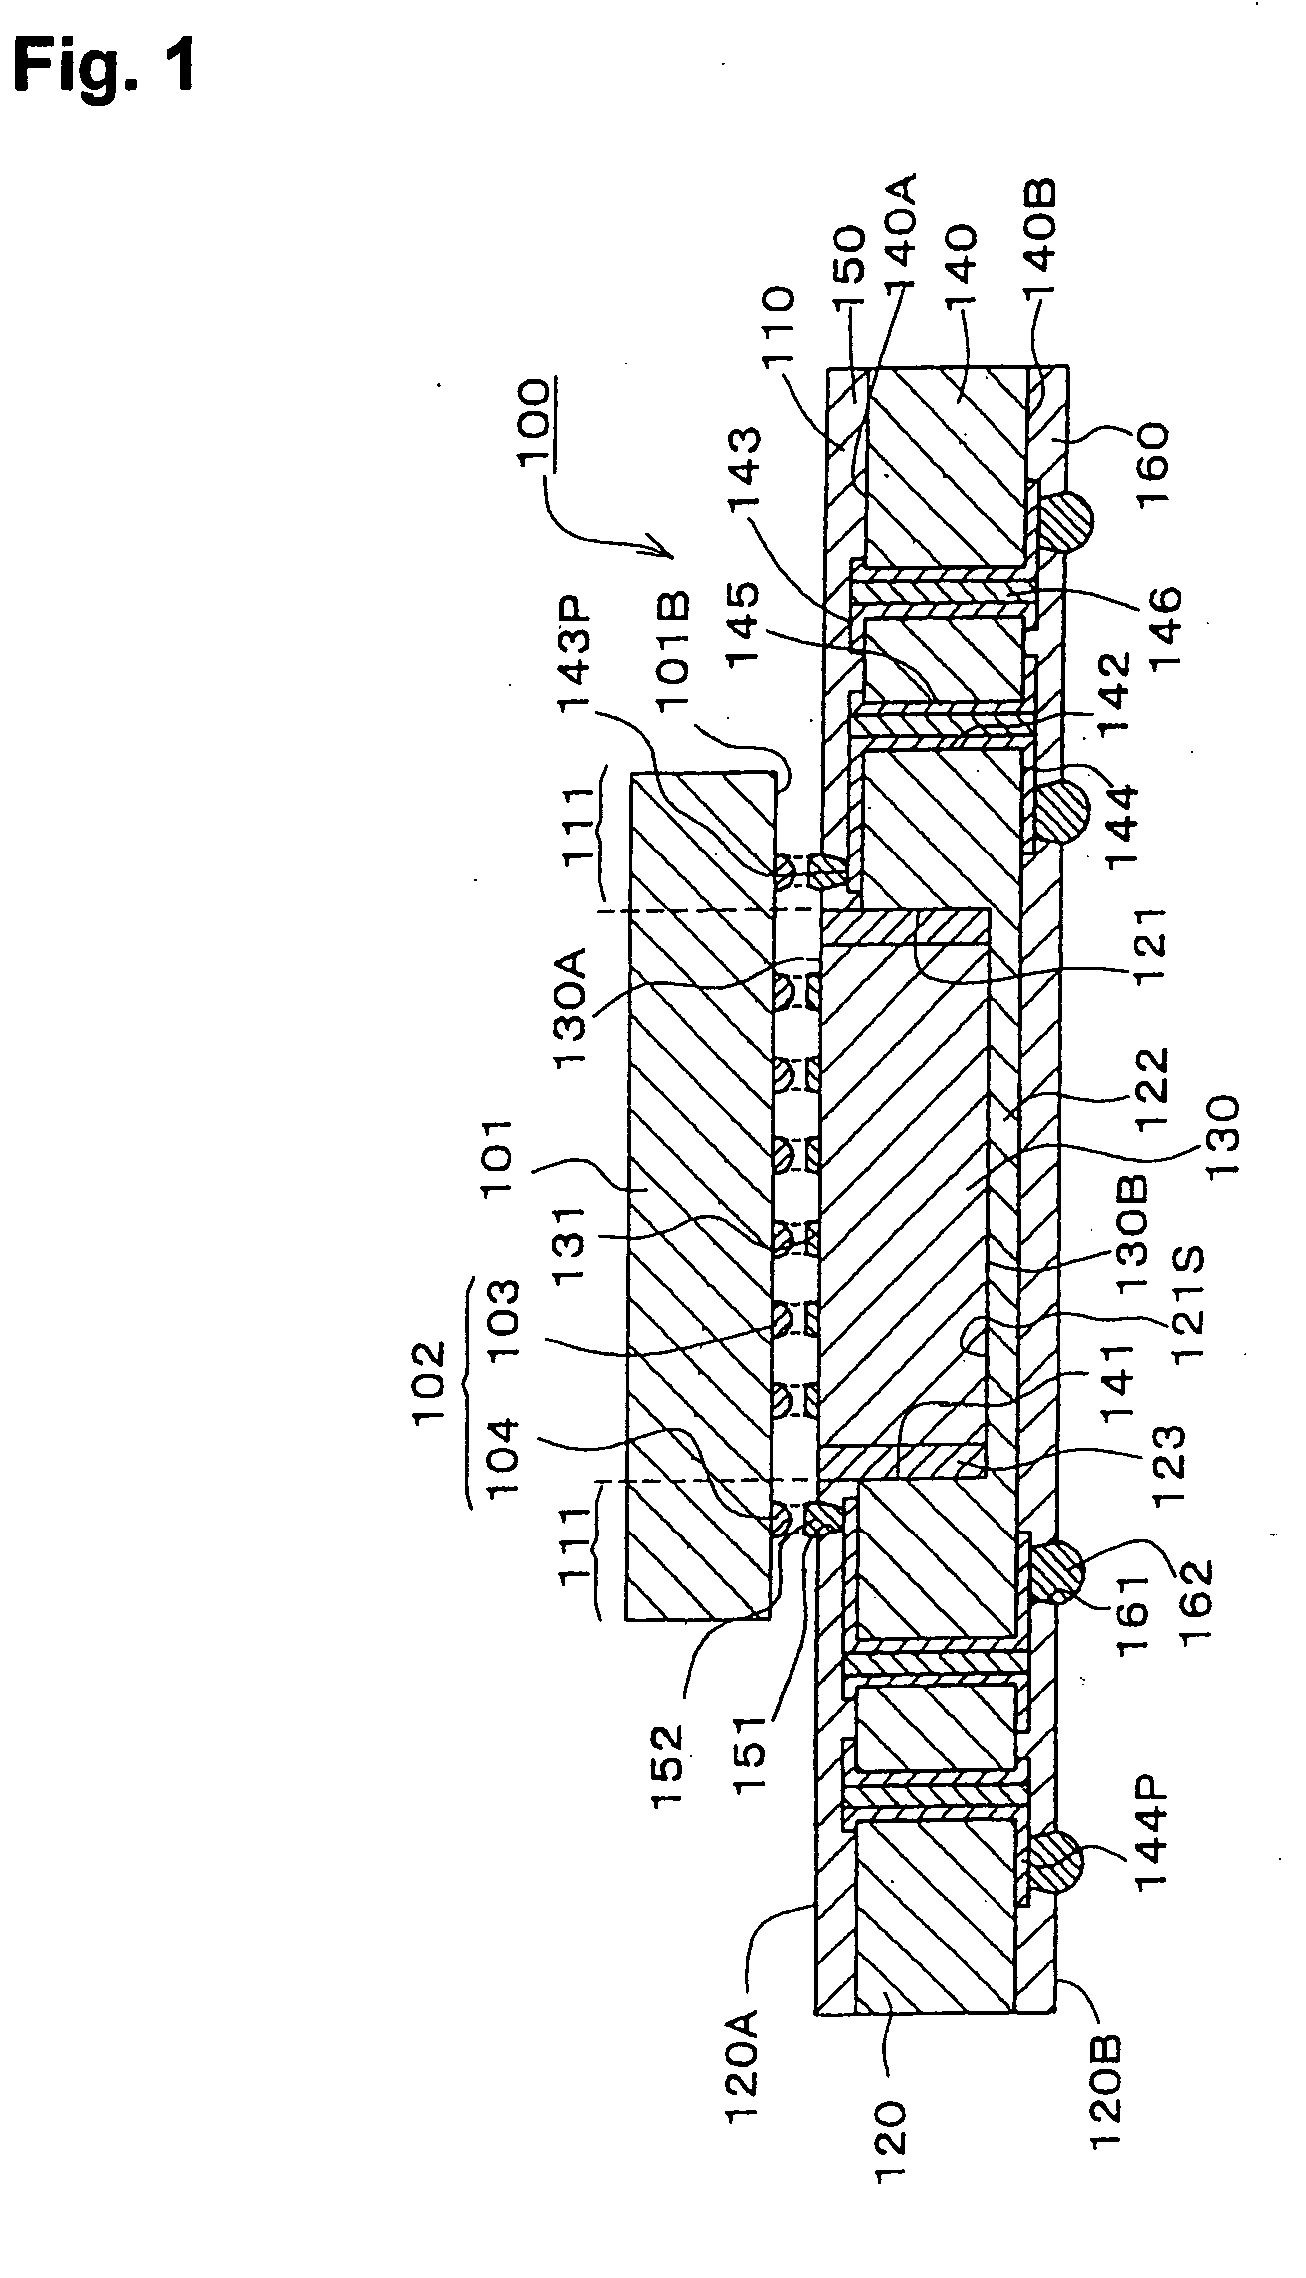 Capacitor-built-in-type printed wiring substrate printed wiring substrate, and capacitor